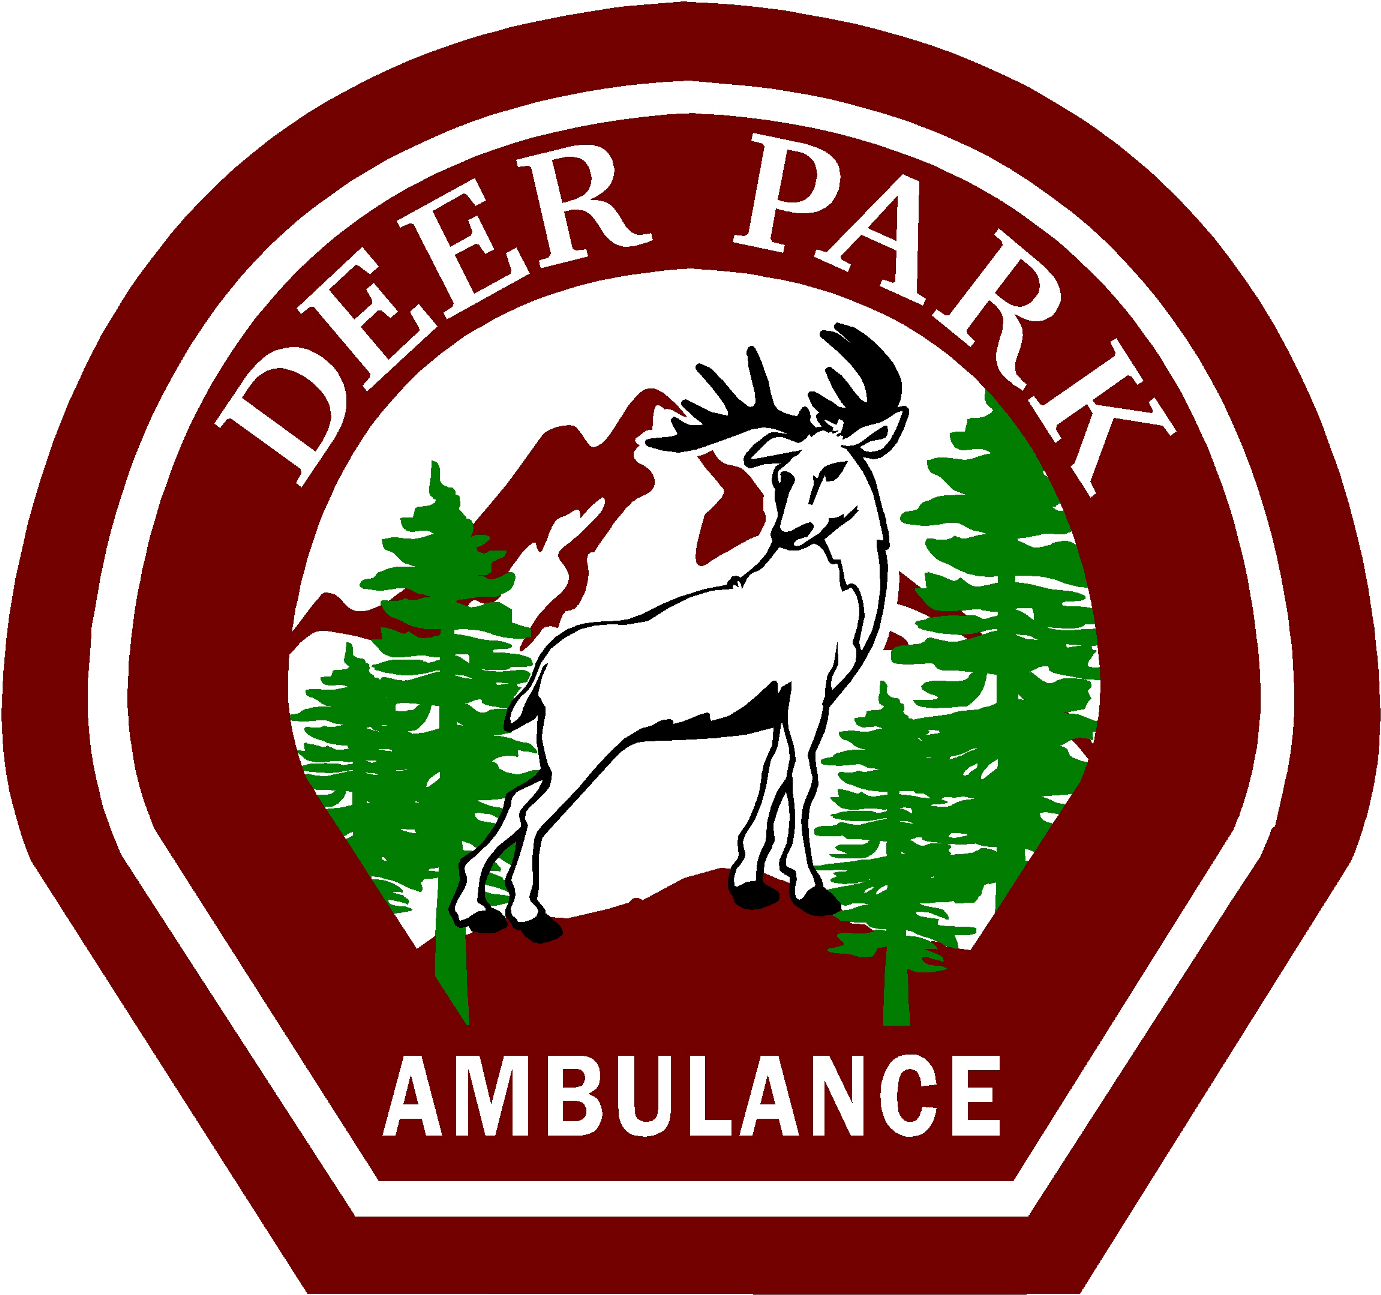 Deer Park Volunteer Ambulance